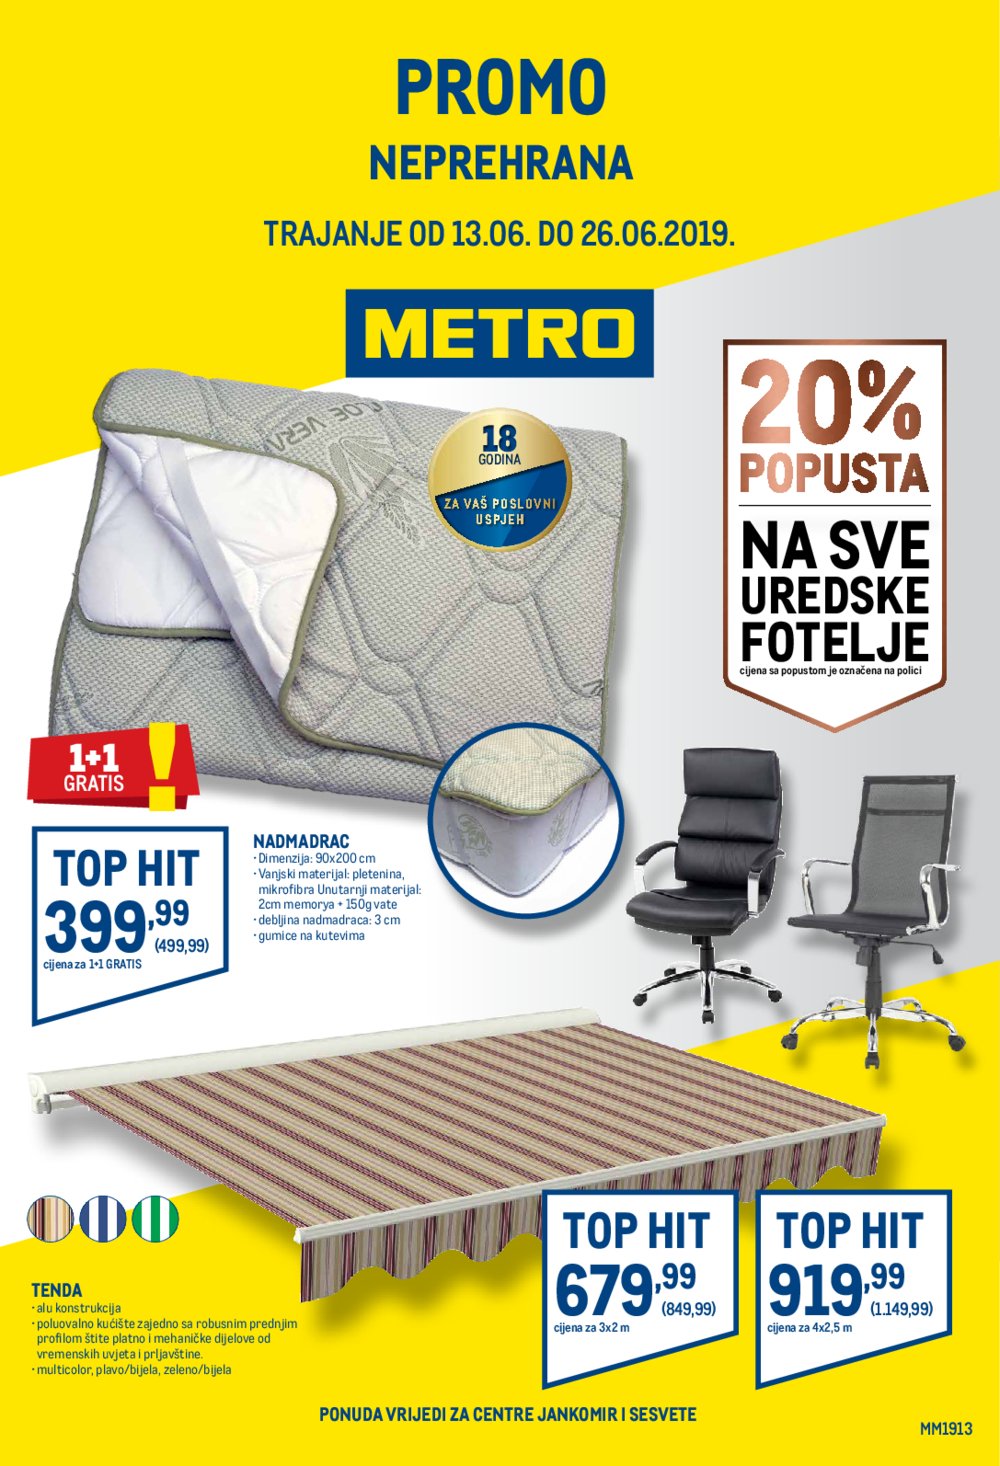 Metro katalog promo neprehrana 13.06.-26.06.2019.